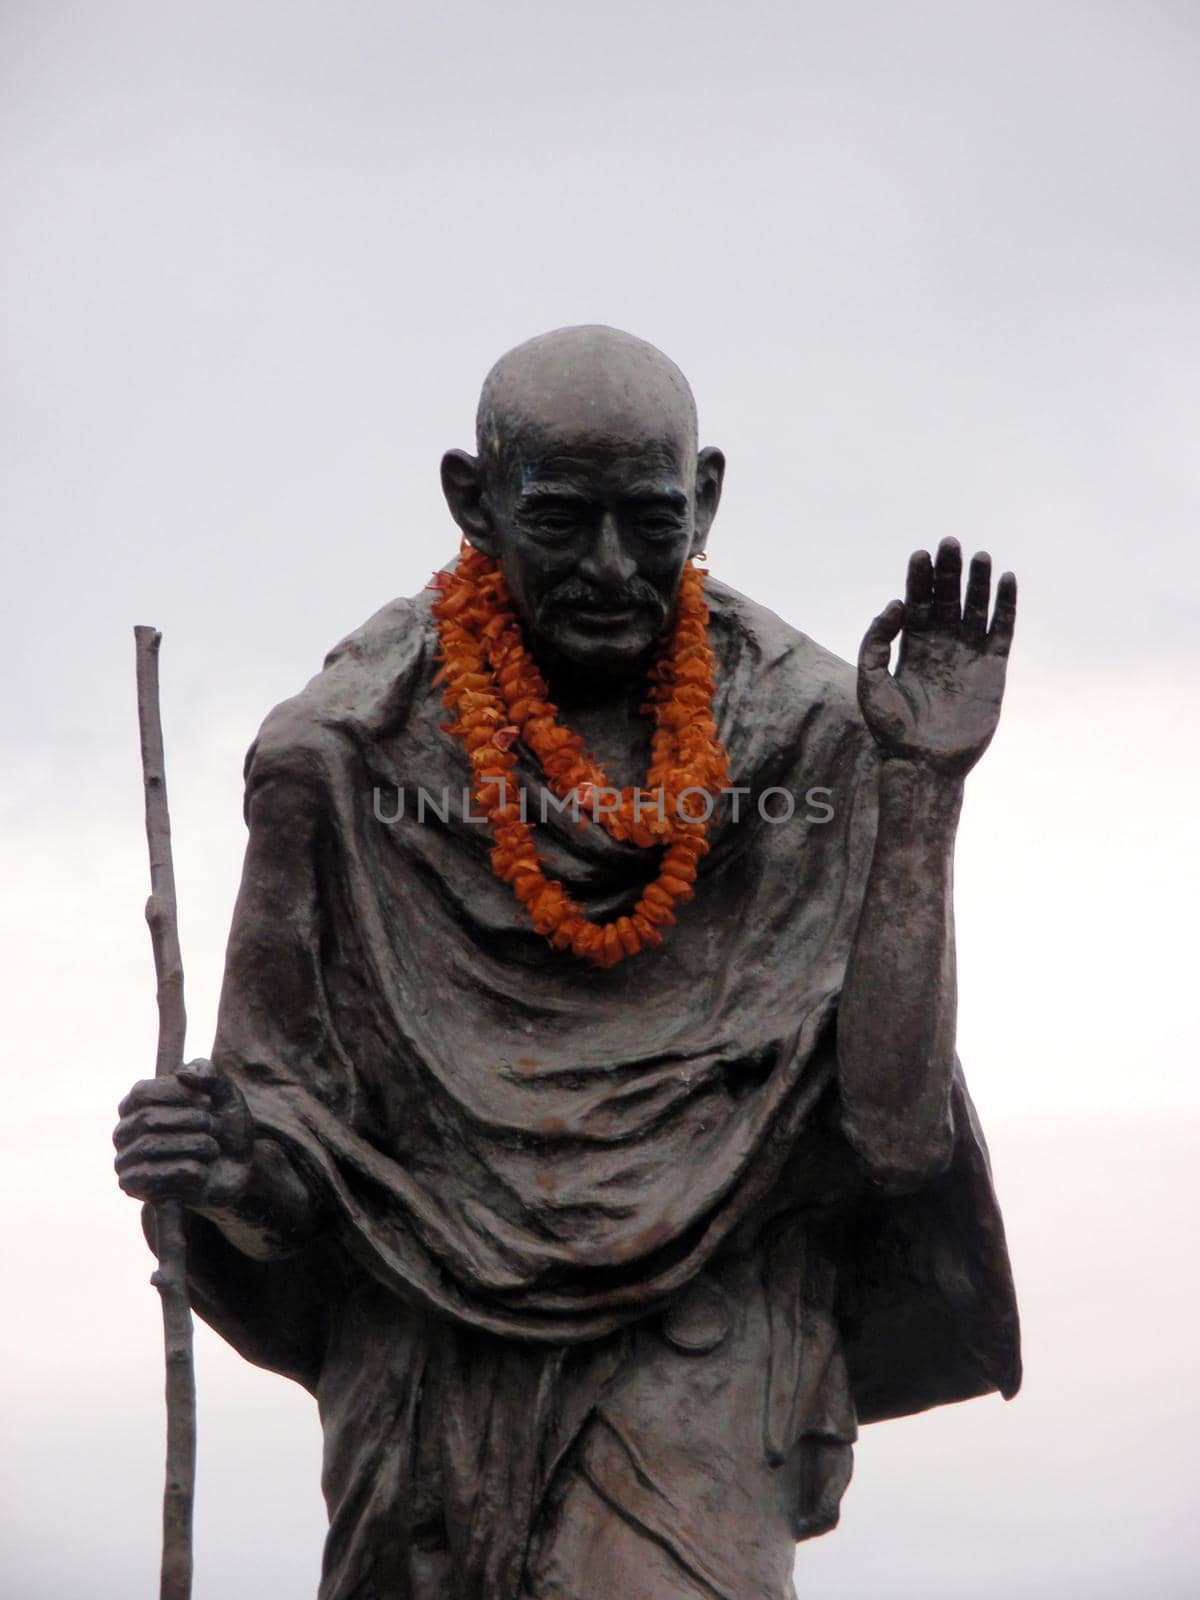 Statue of Ghandi wearing an orange lei by EricGBVD